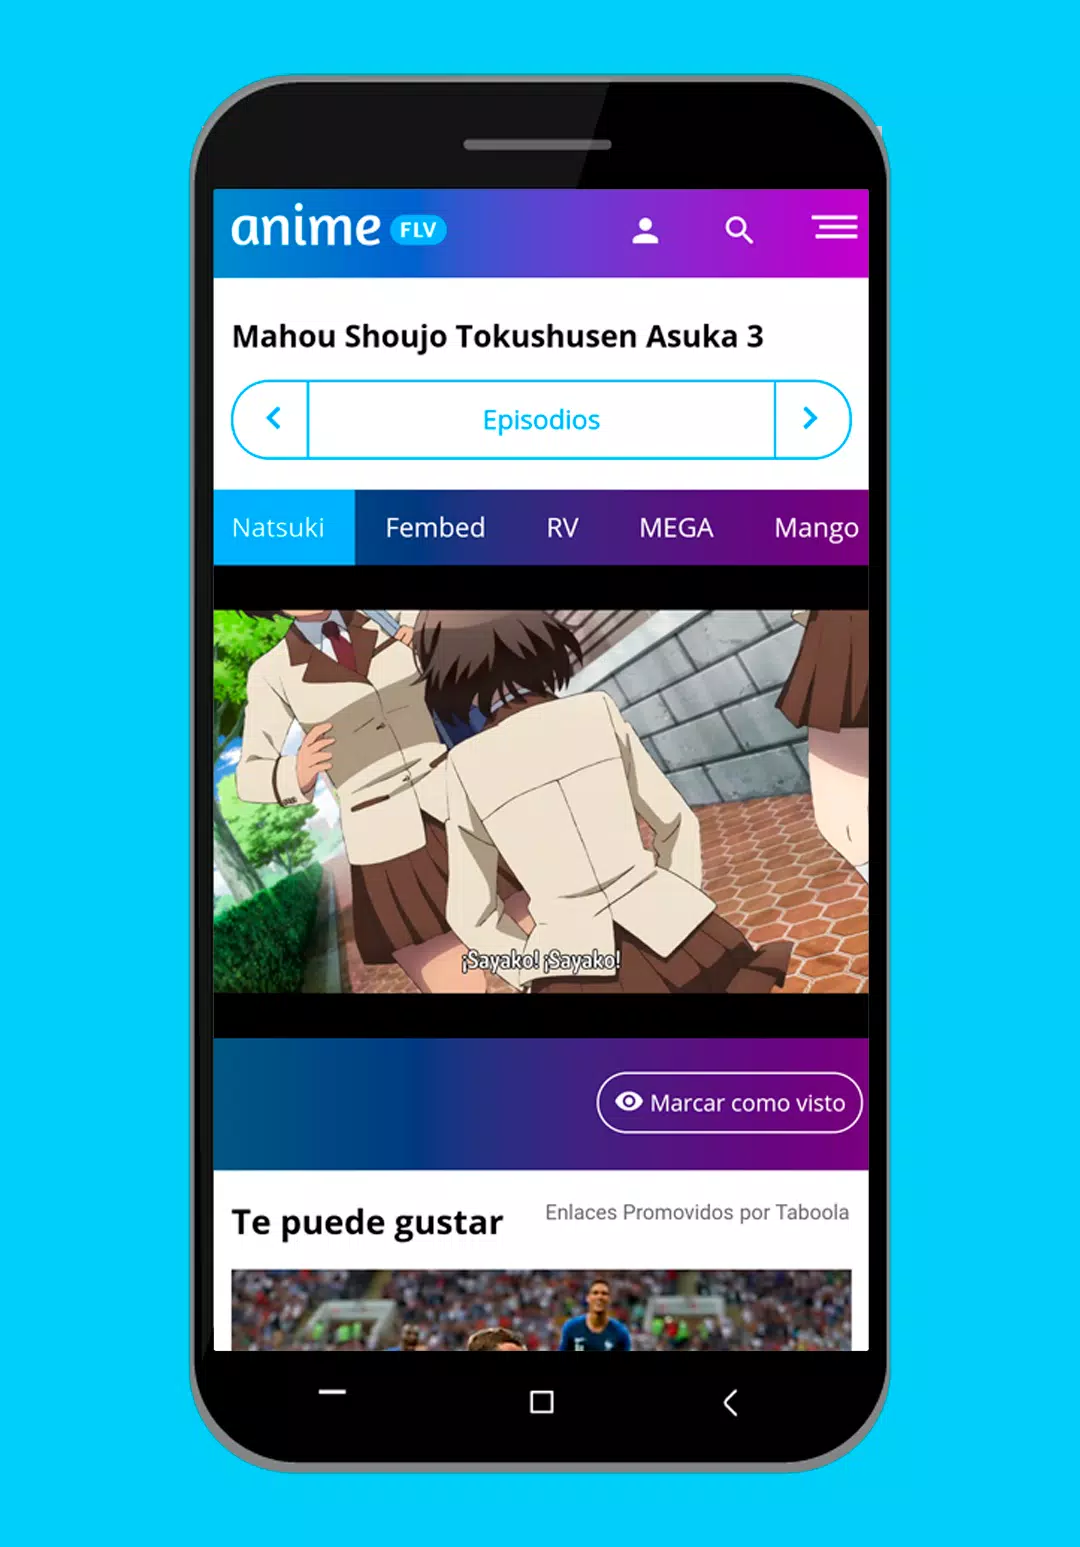 Download AnimeFLV Guia Ver Anime Online App Free on PC (Emulator